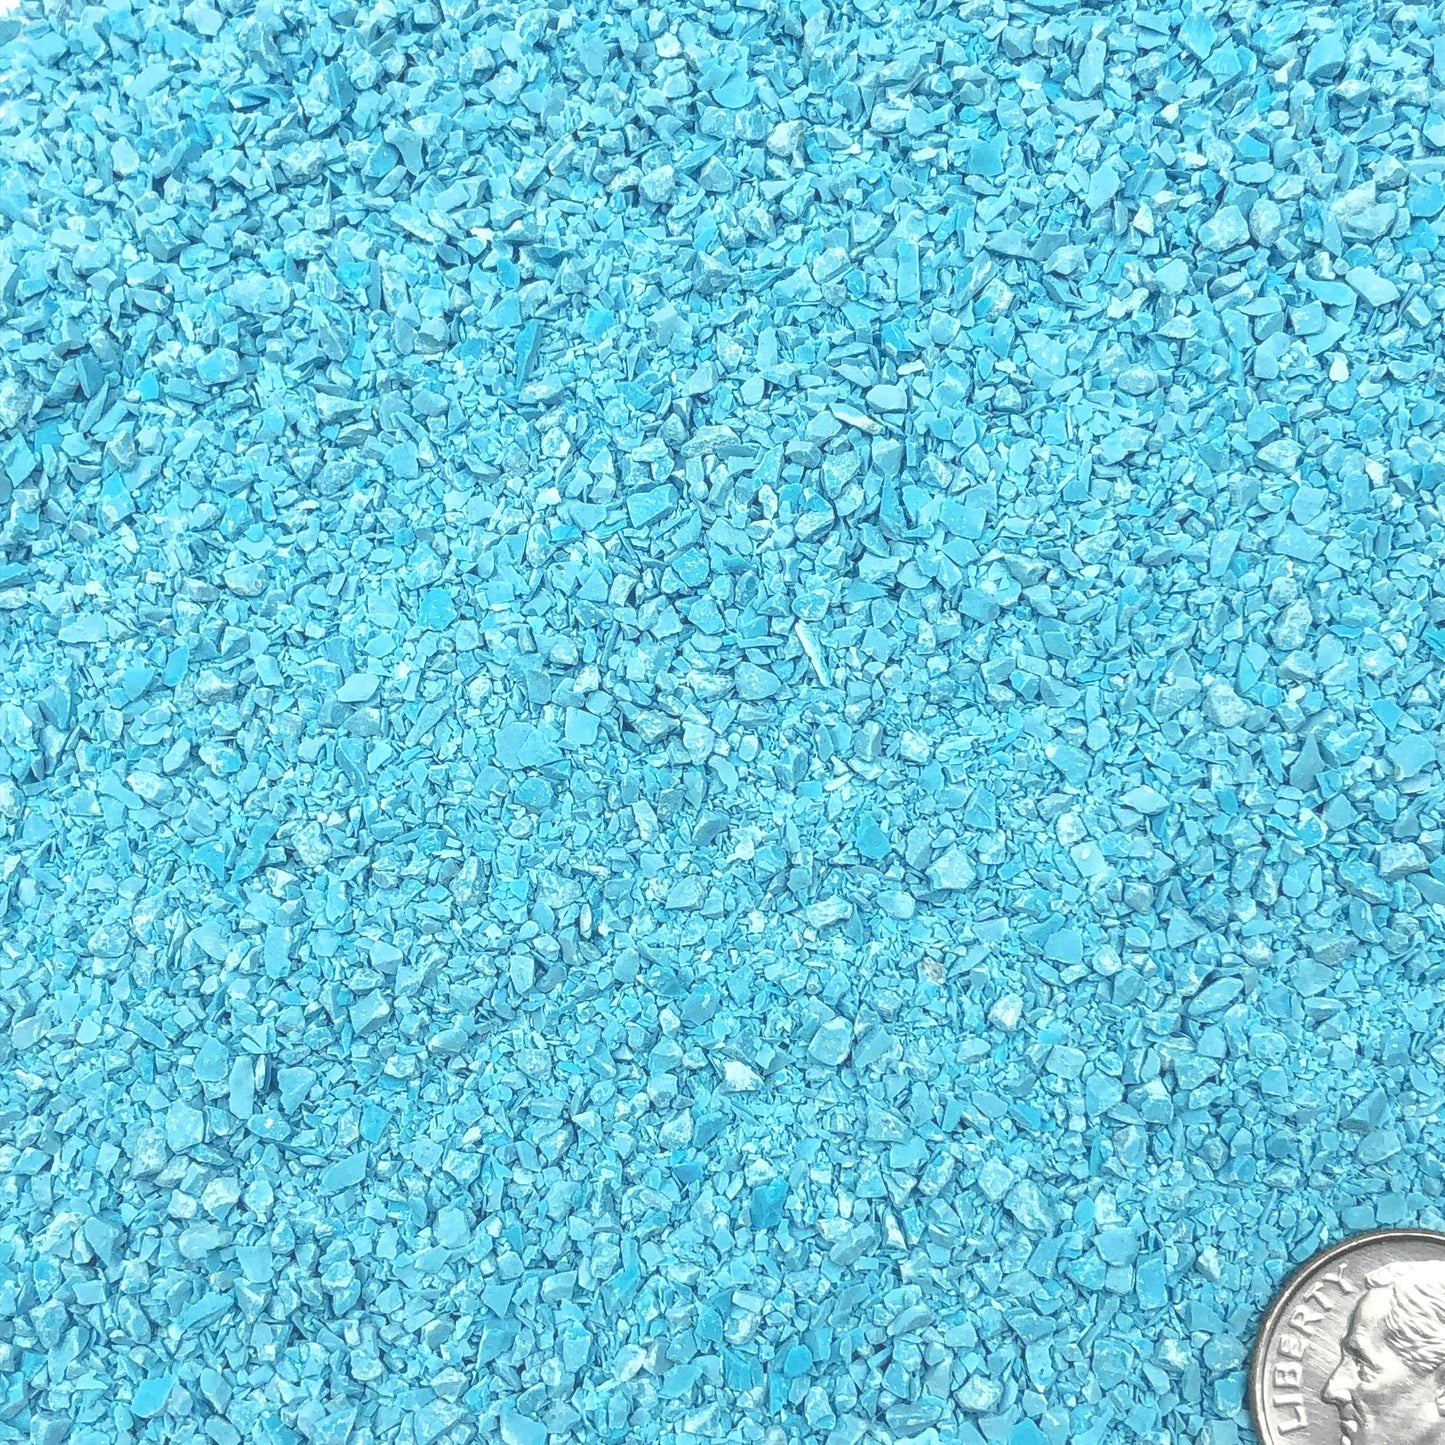 Crushed Blue Turquoise (Lab-Created), Medium Crush, Sand Size, 2mm - 0.25mm